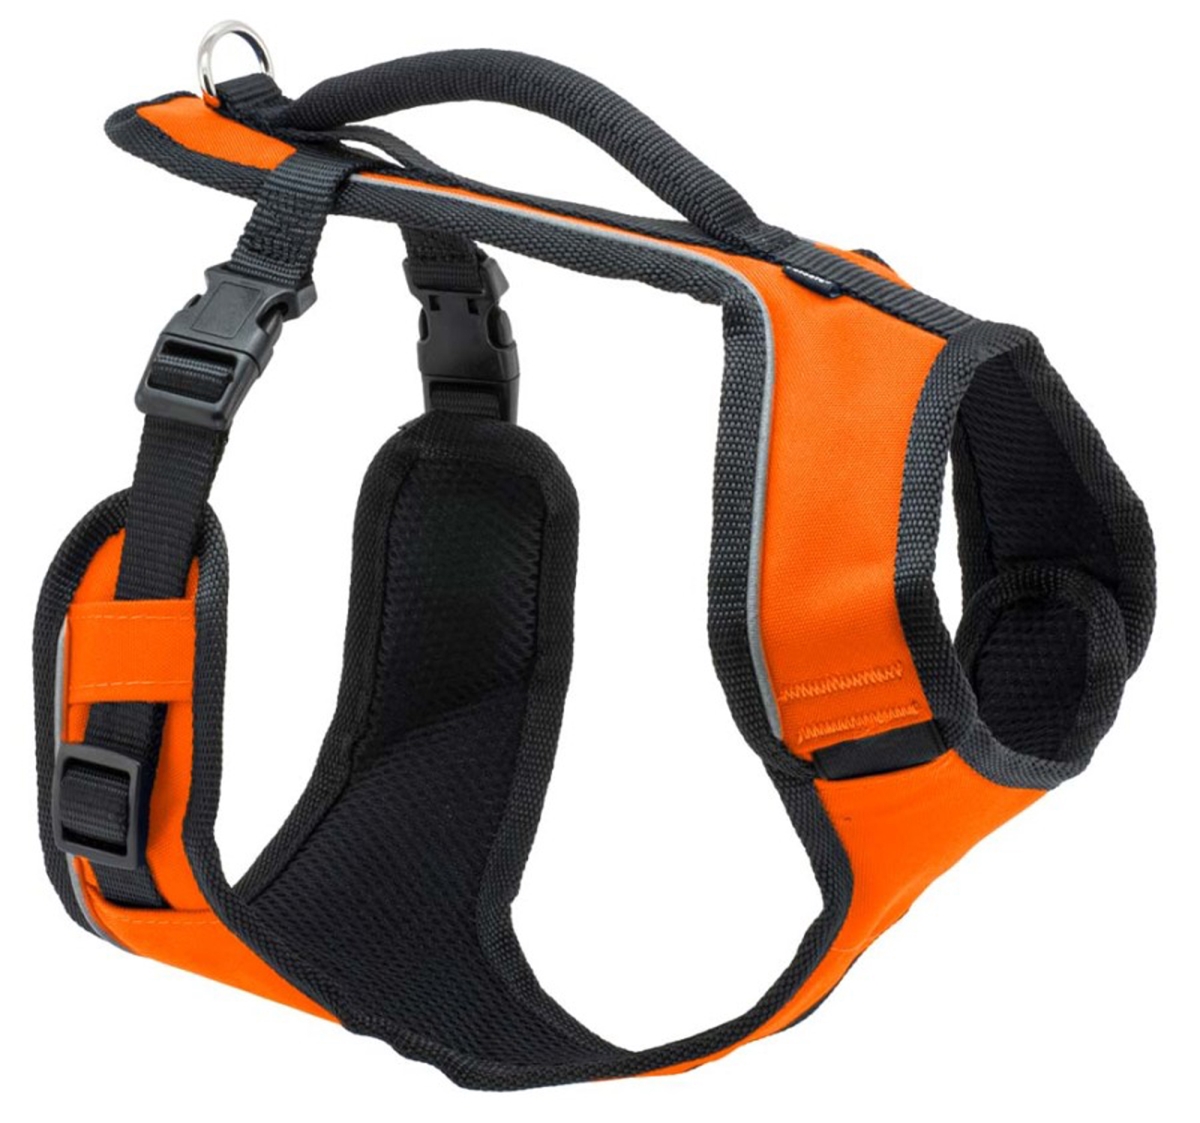 Picture of Radio Systems 729849167148 Petsafe Easysport Comfortable Dog Harness, Orange - Medium